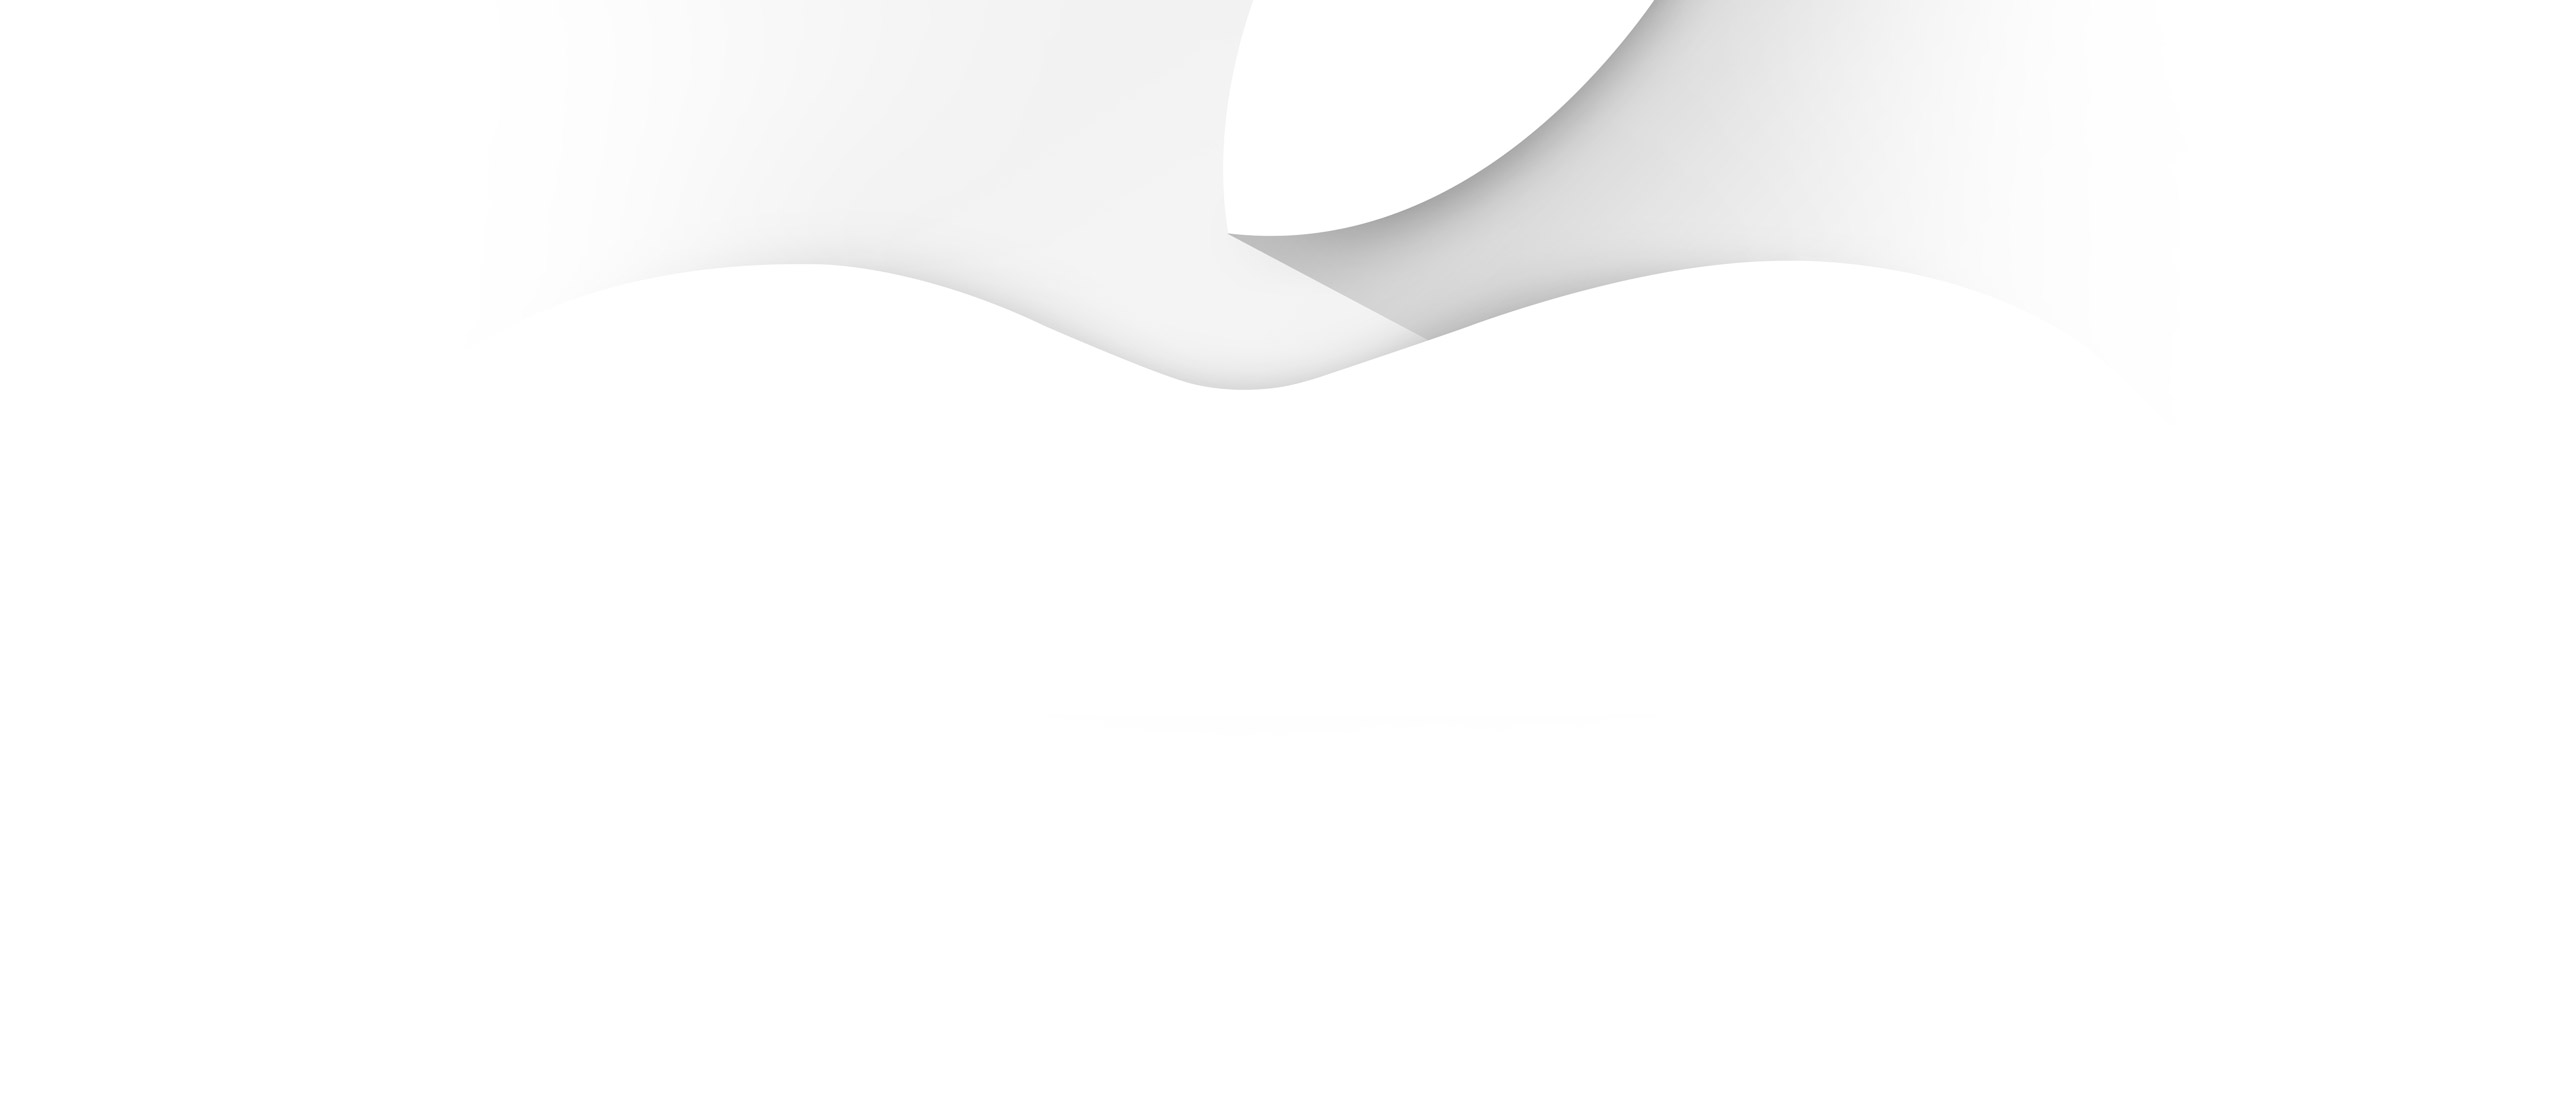 Keynote Apple 2014